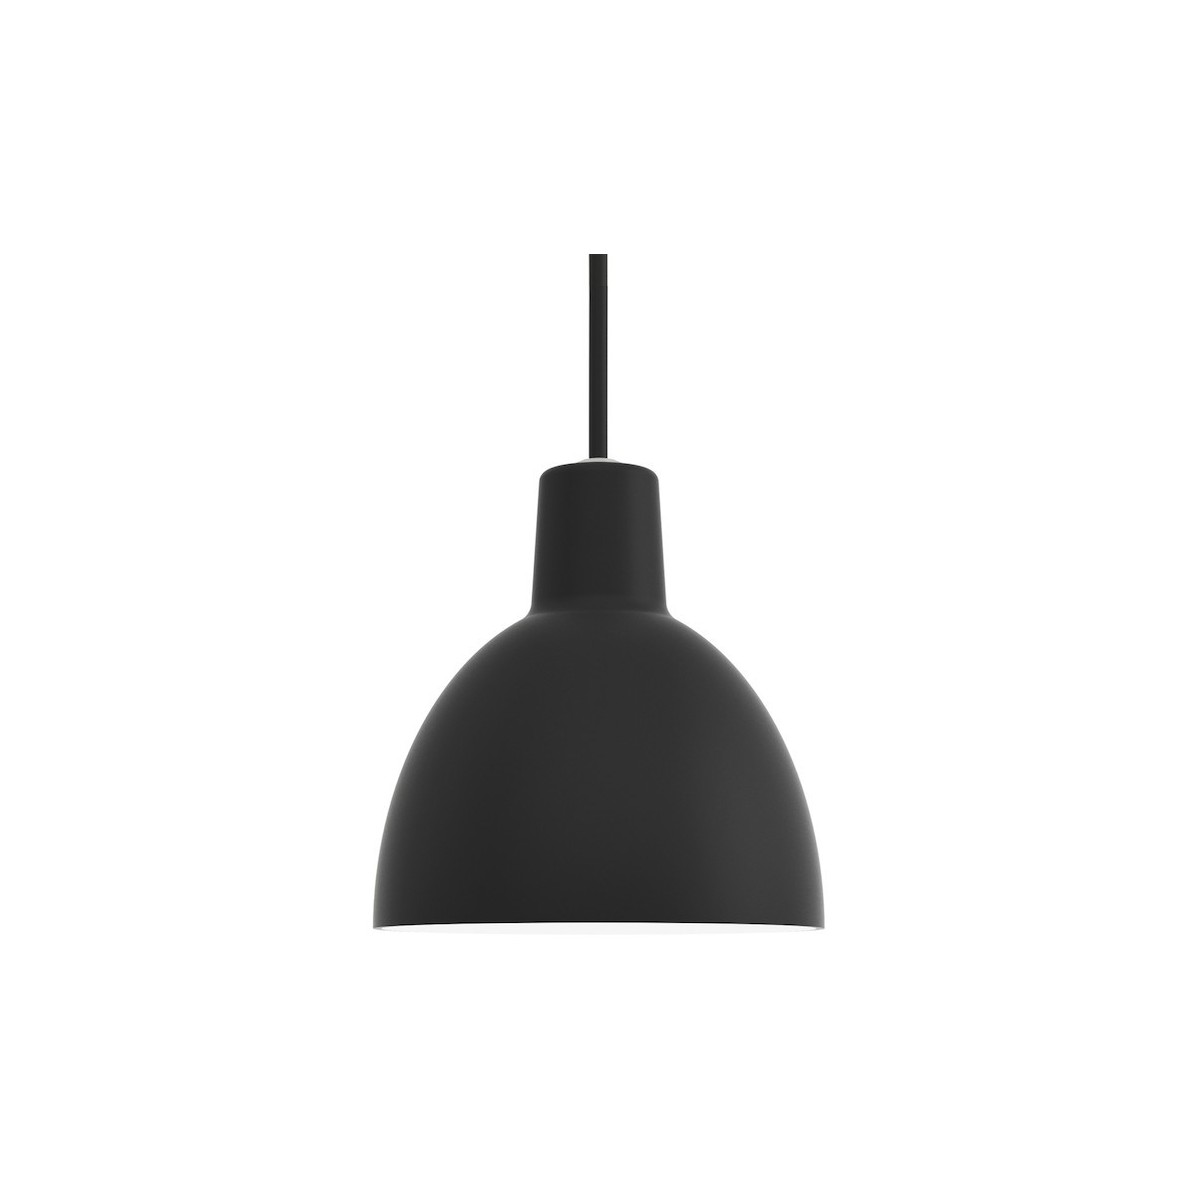 Ø17cm - black - Toldbod 170 pendant lamp